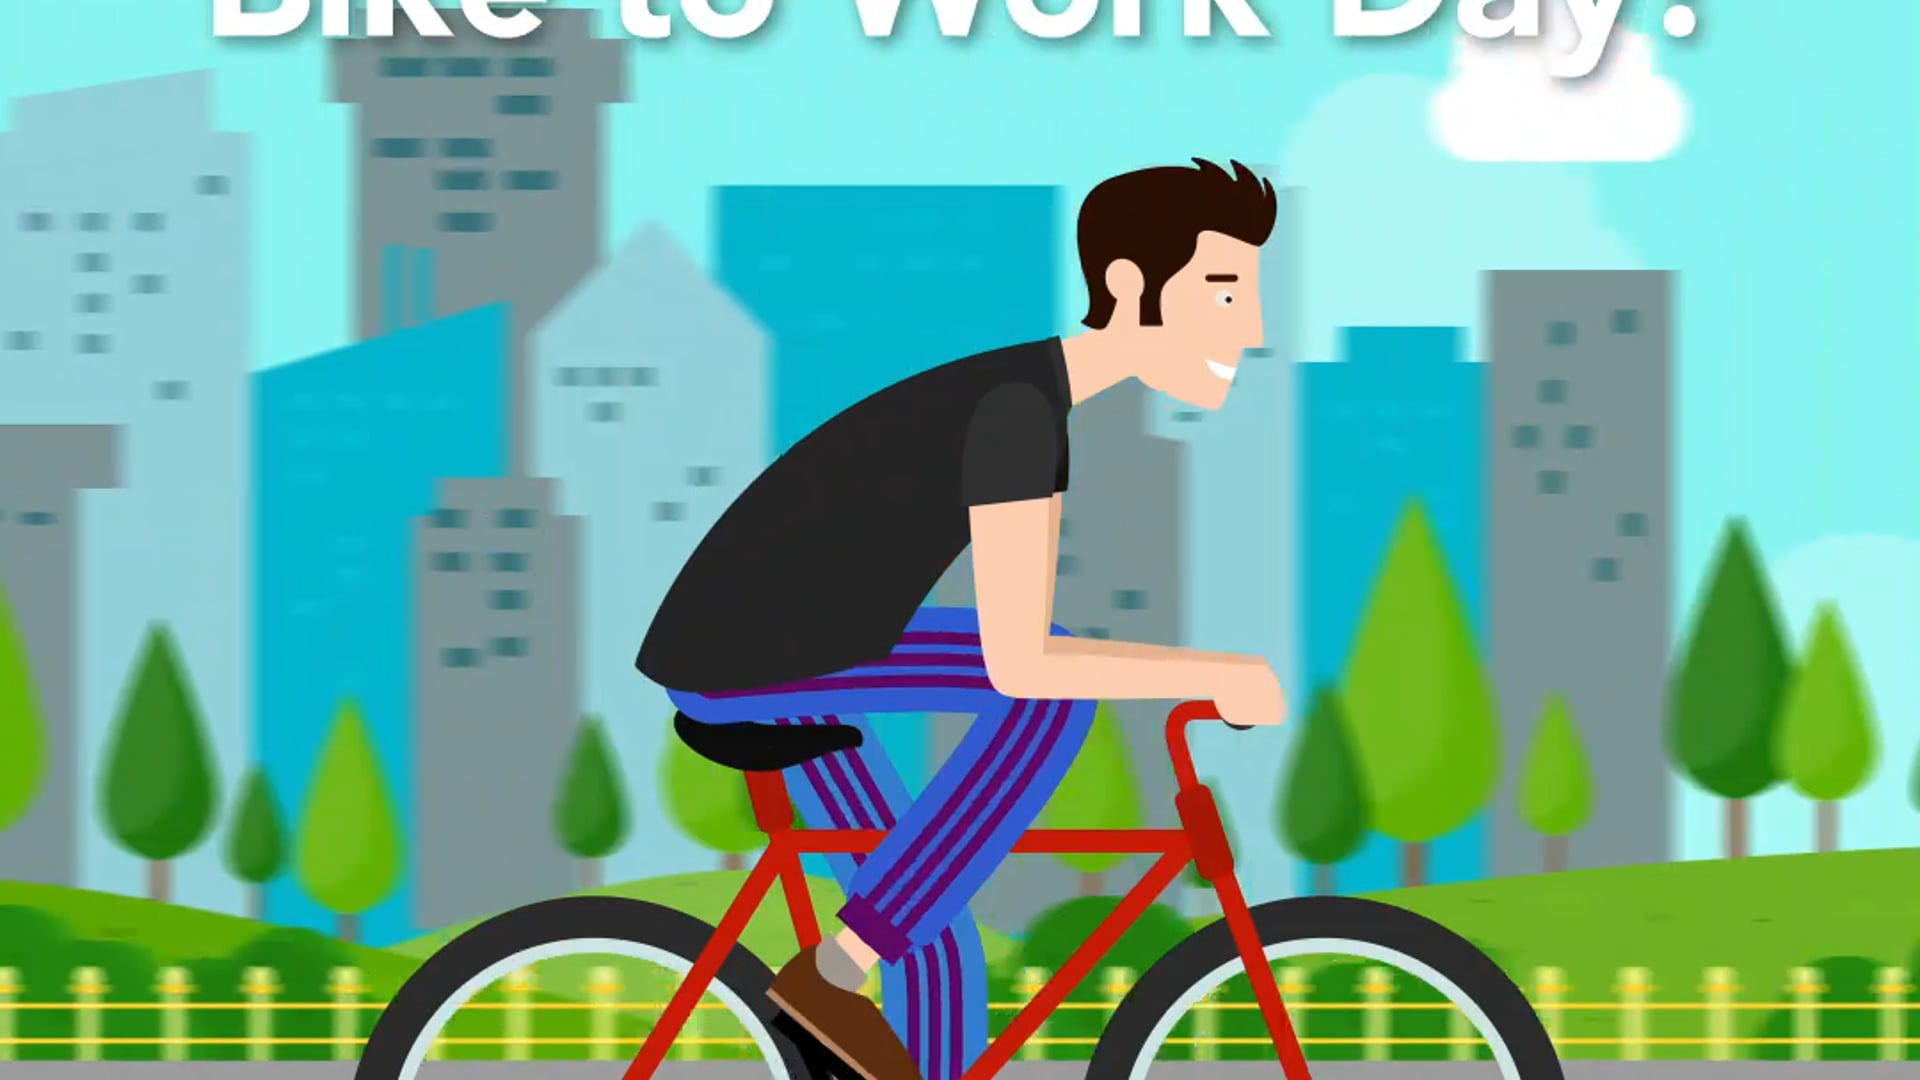 National Bike To Work Day - Social Media Animation